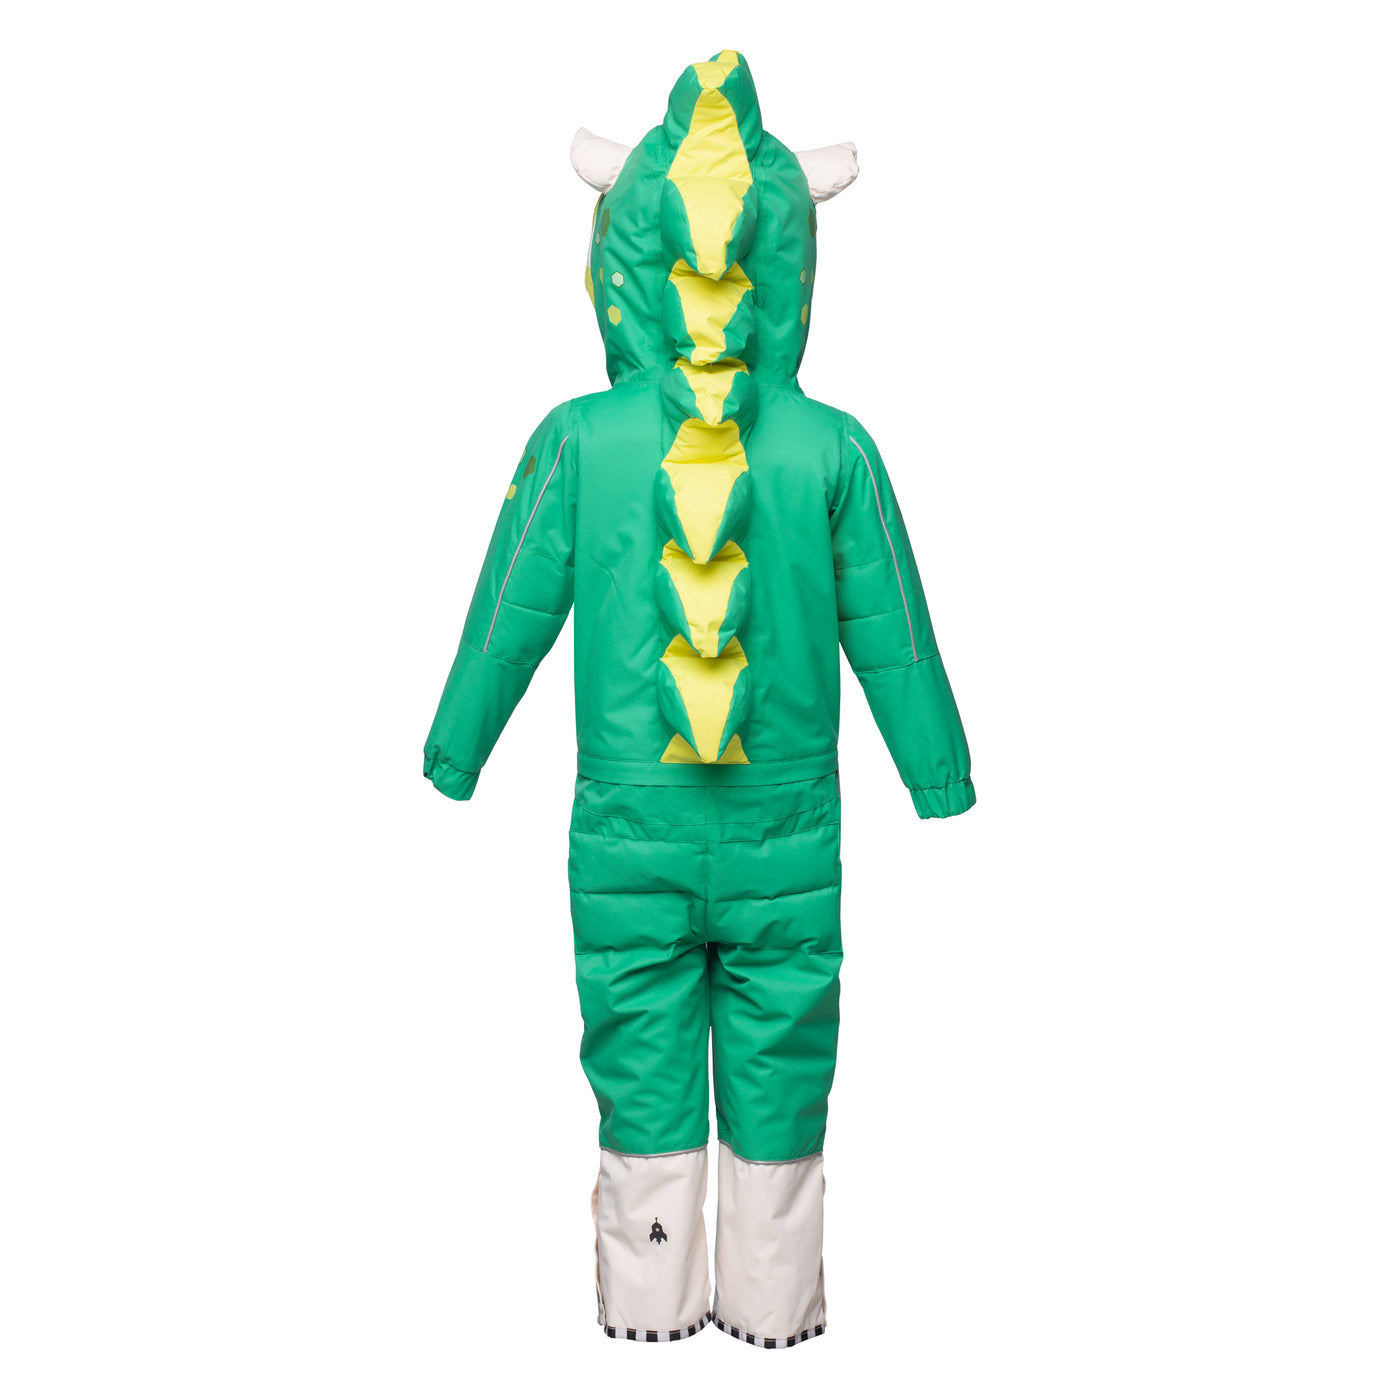 WeeDo Kids Snowsuit Monster Green - DISCONTINUED